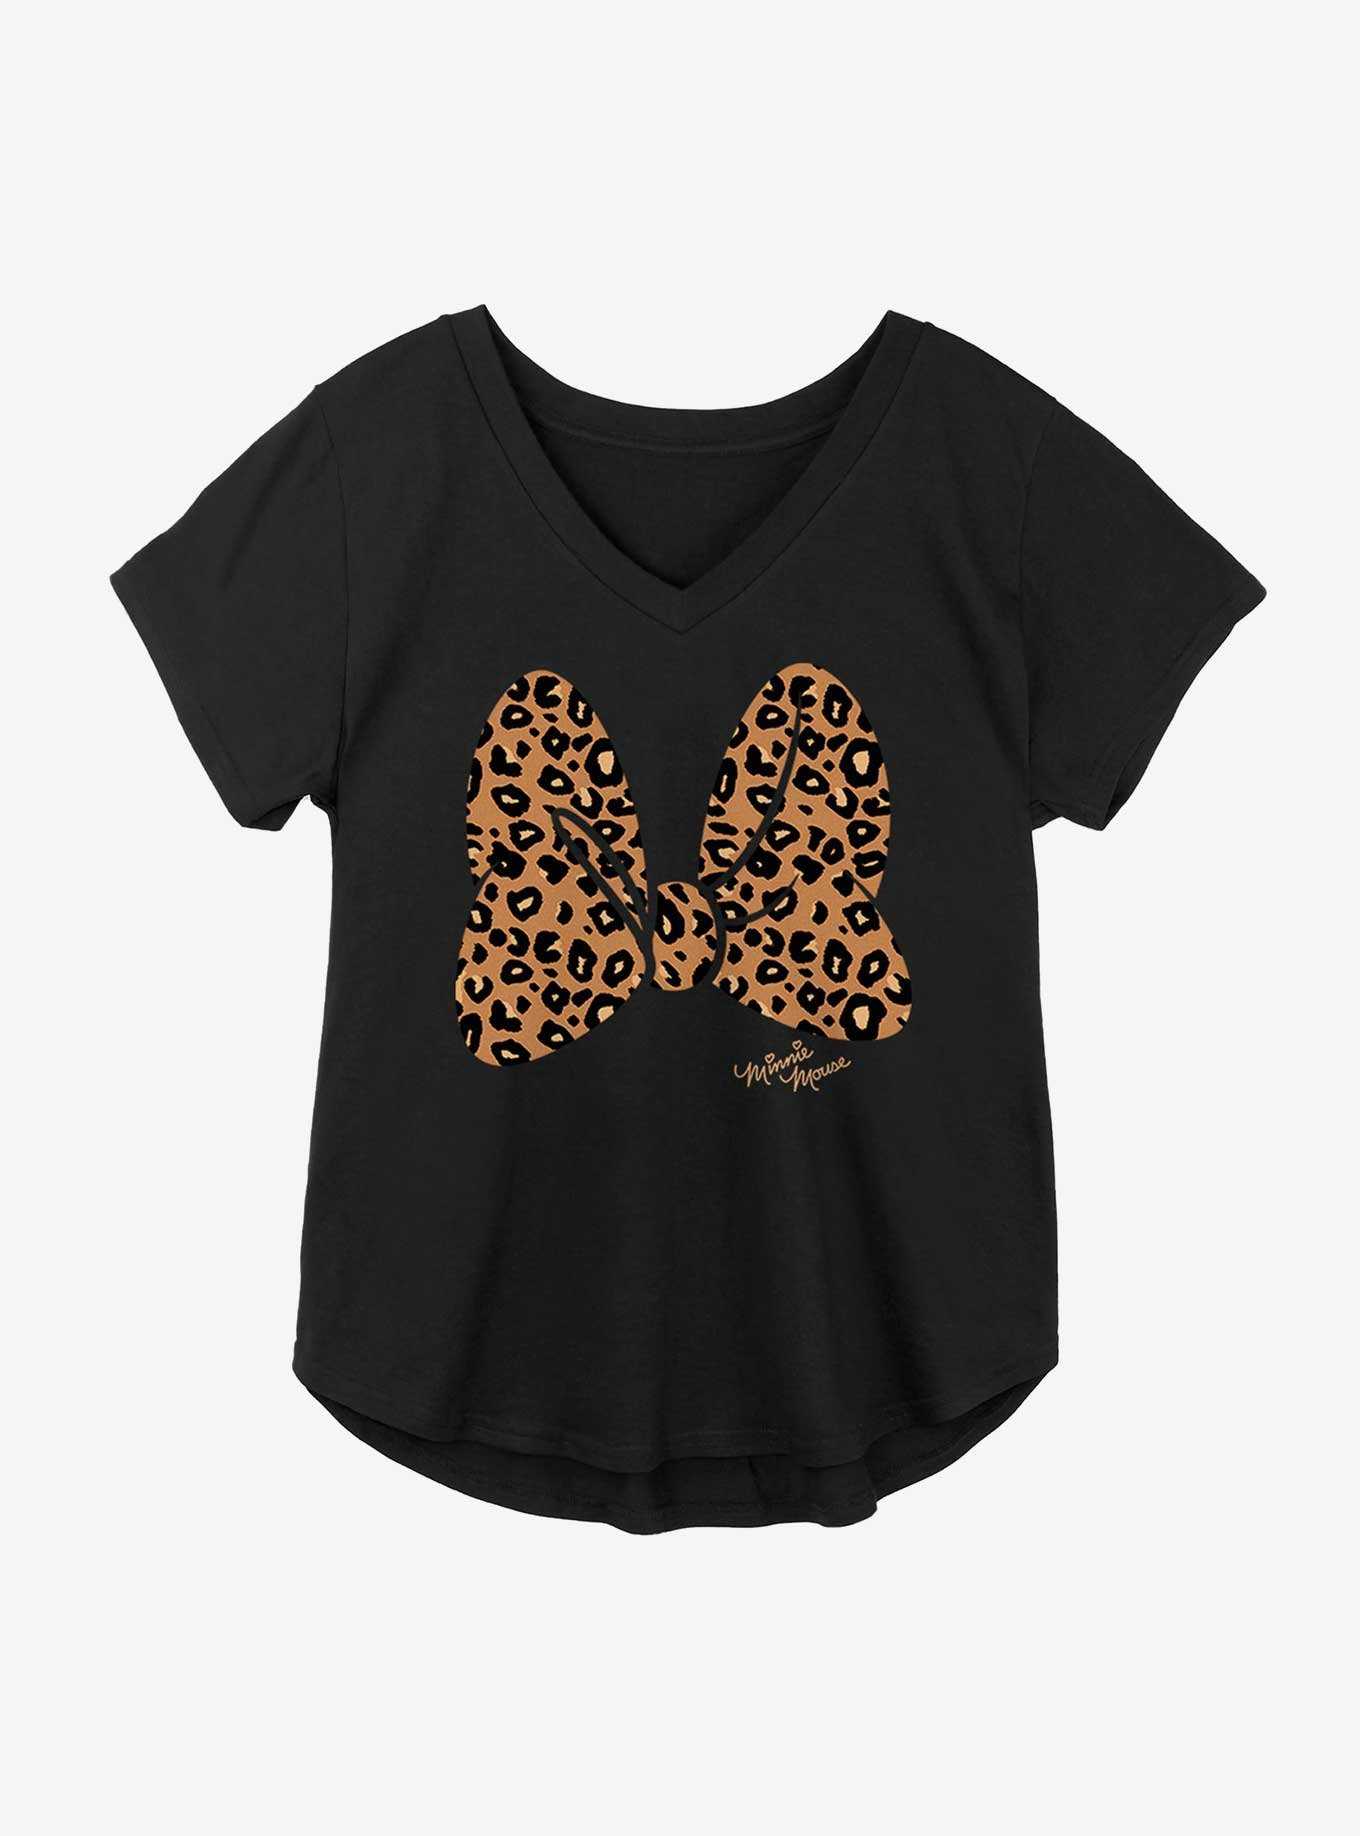 Disney Minnie Mouse Animal Print Bow Girls Plus Size T-Shirt, , hi-res